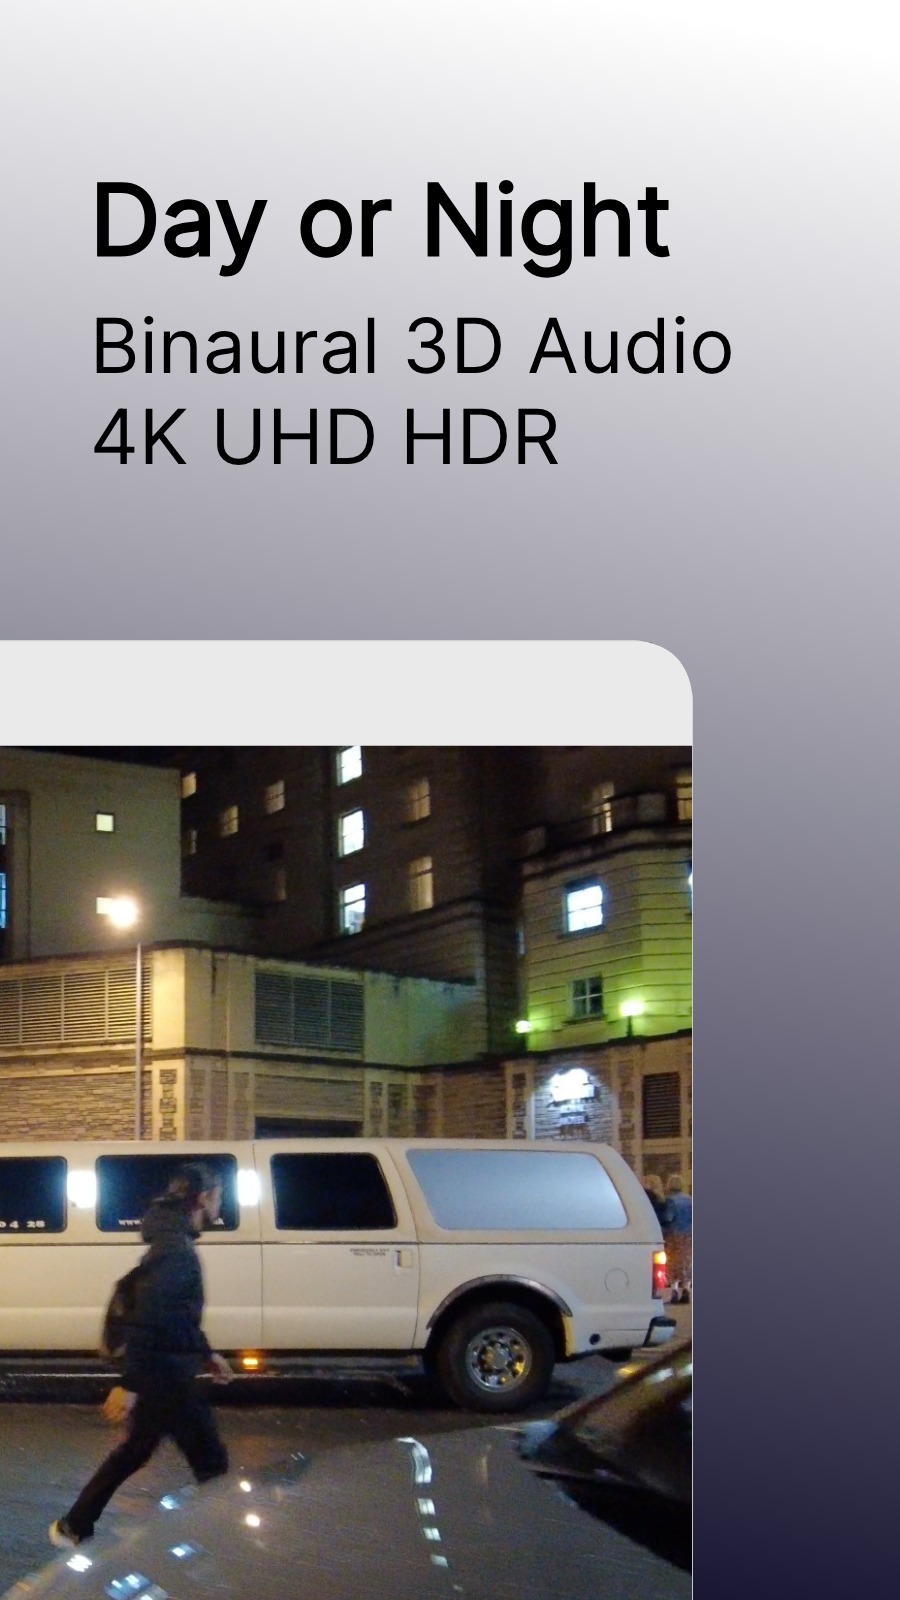 Day or Night - Binaural 3D Audio 4K UHD HDR